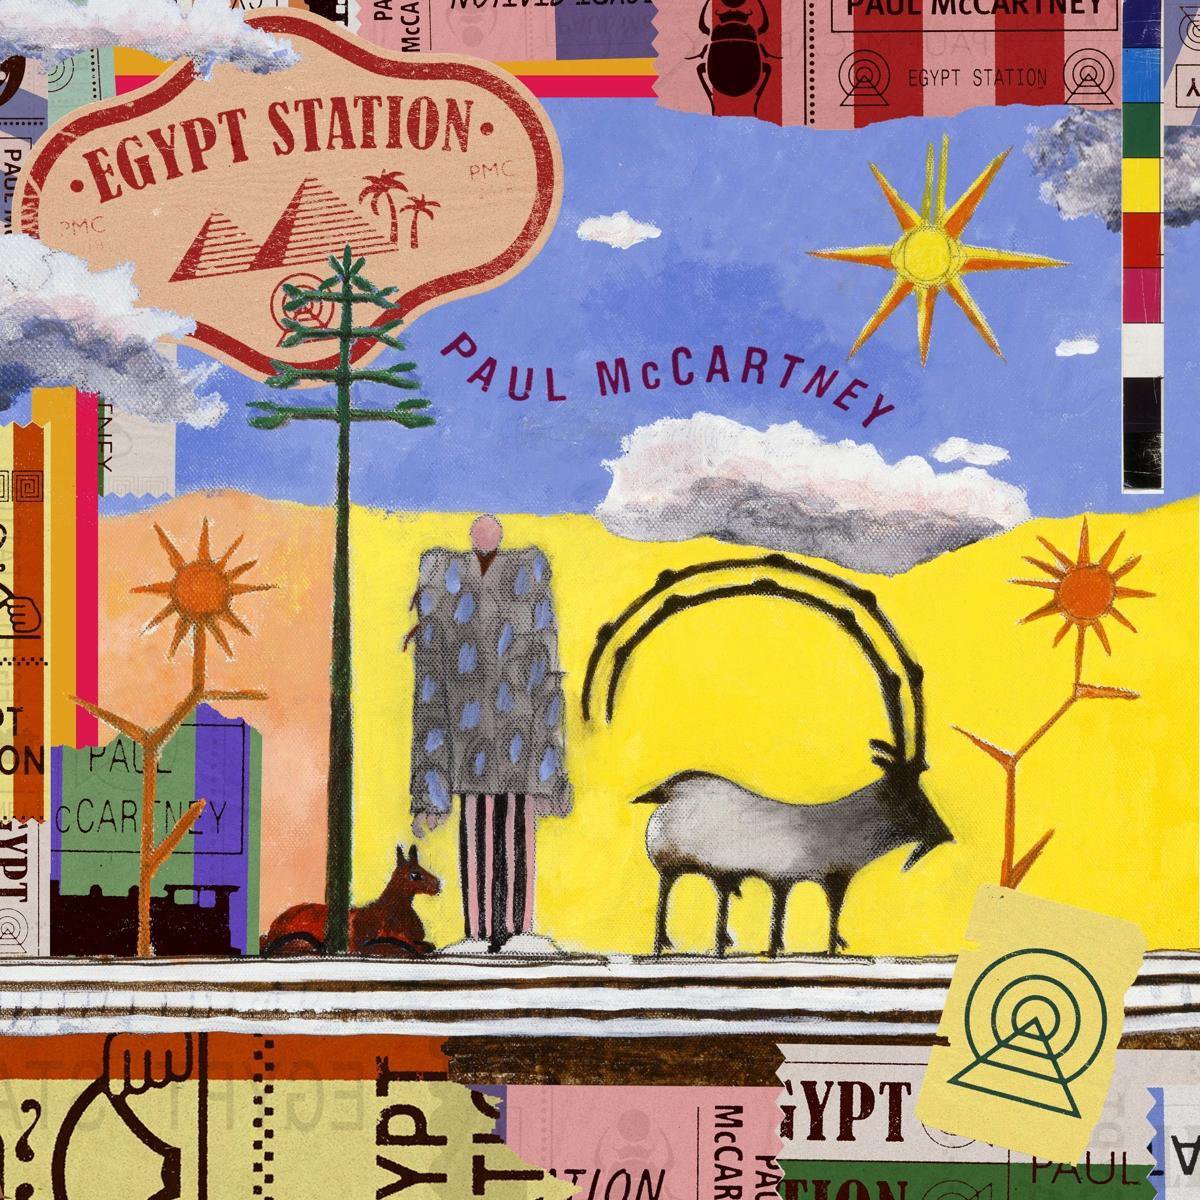 Egypt Station - Mccartney Paul - Paul McCartney